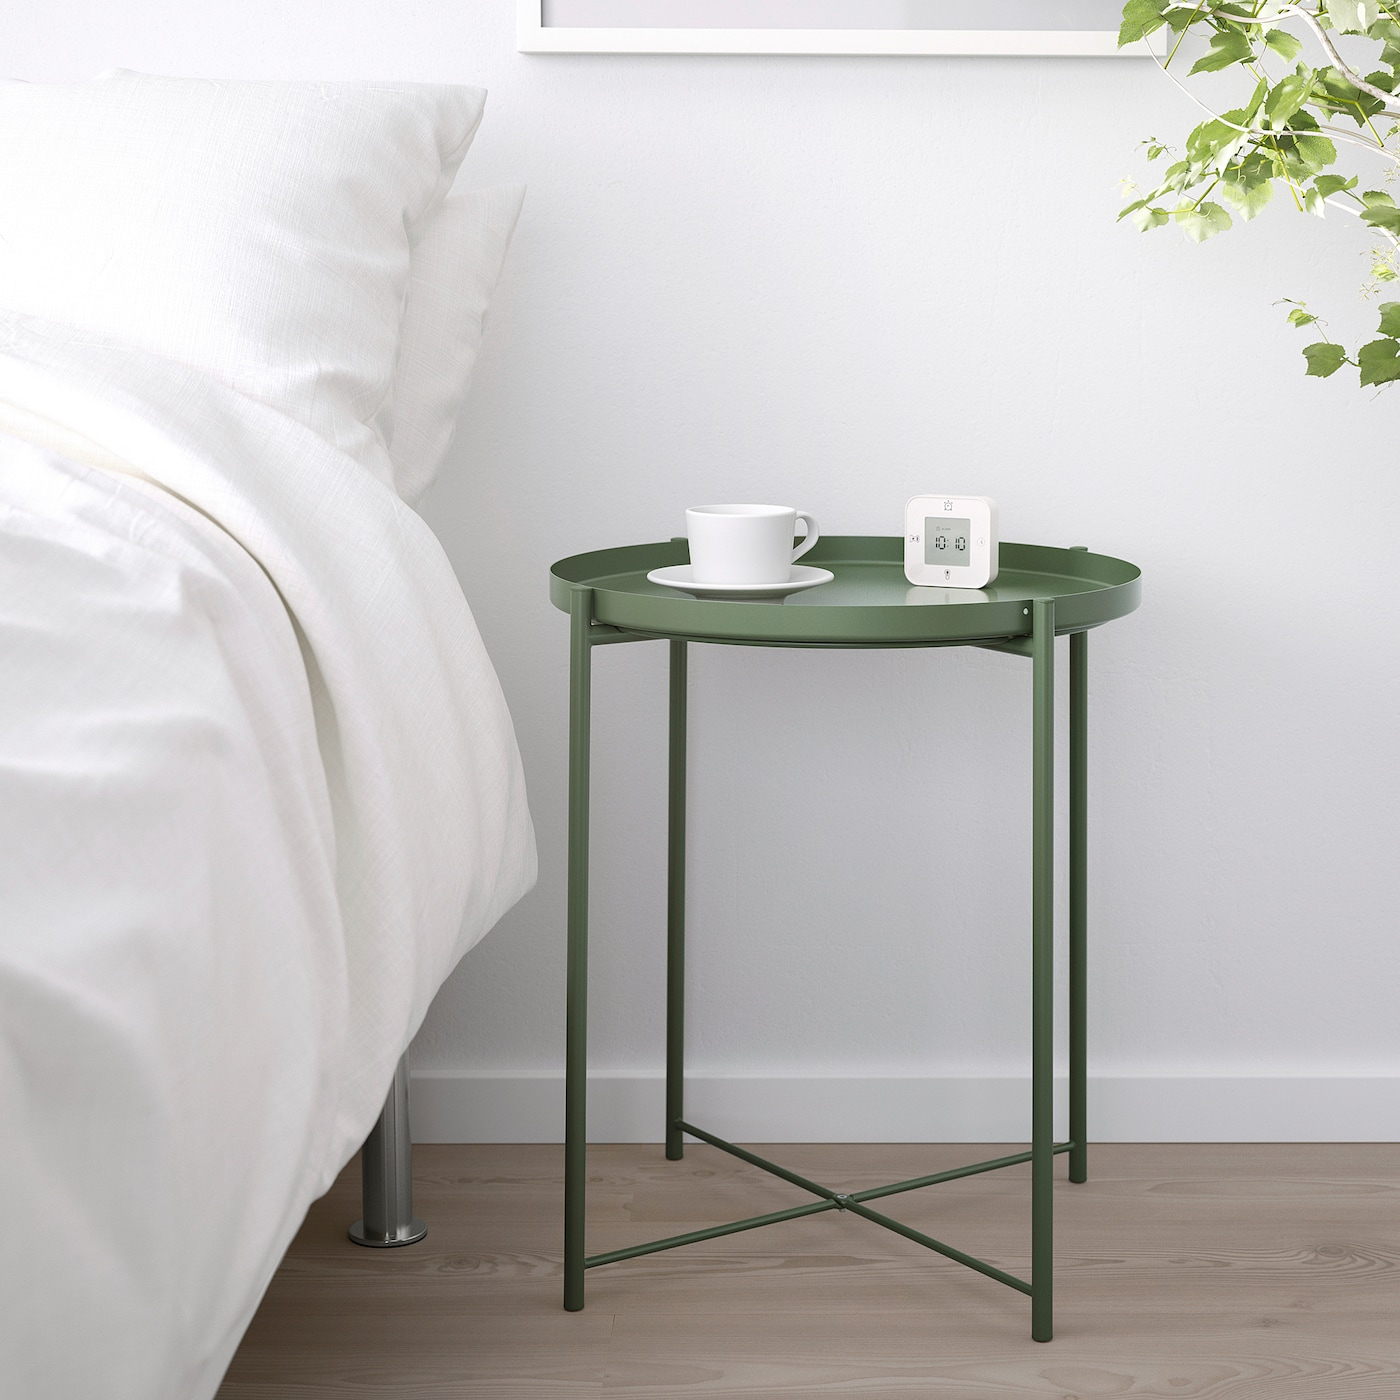 Gladom Table/plateau - Vert Foncé 45X53 Cm dedans Table Basse De Jardin Ikea